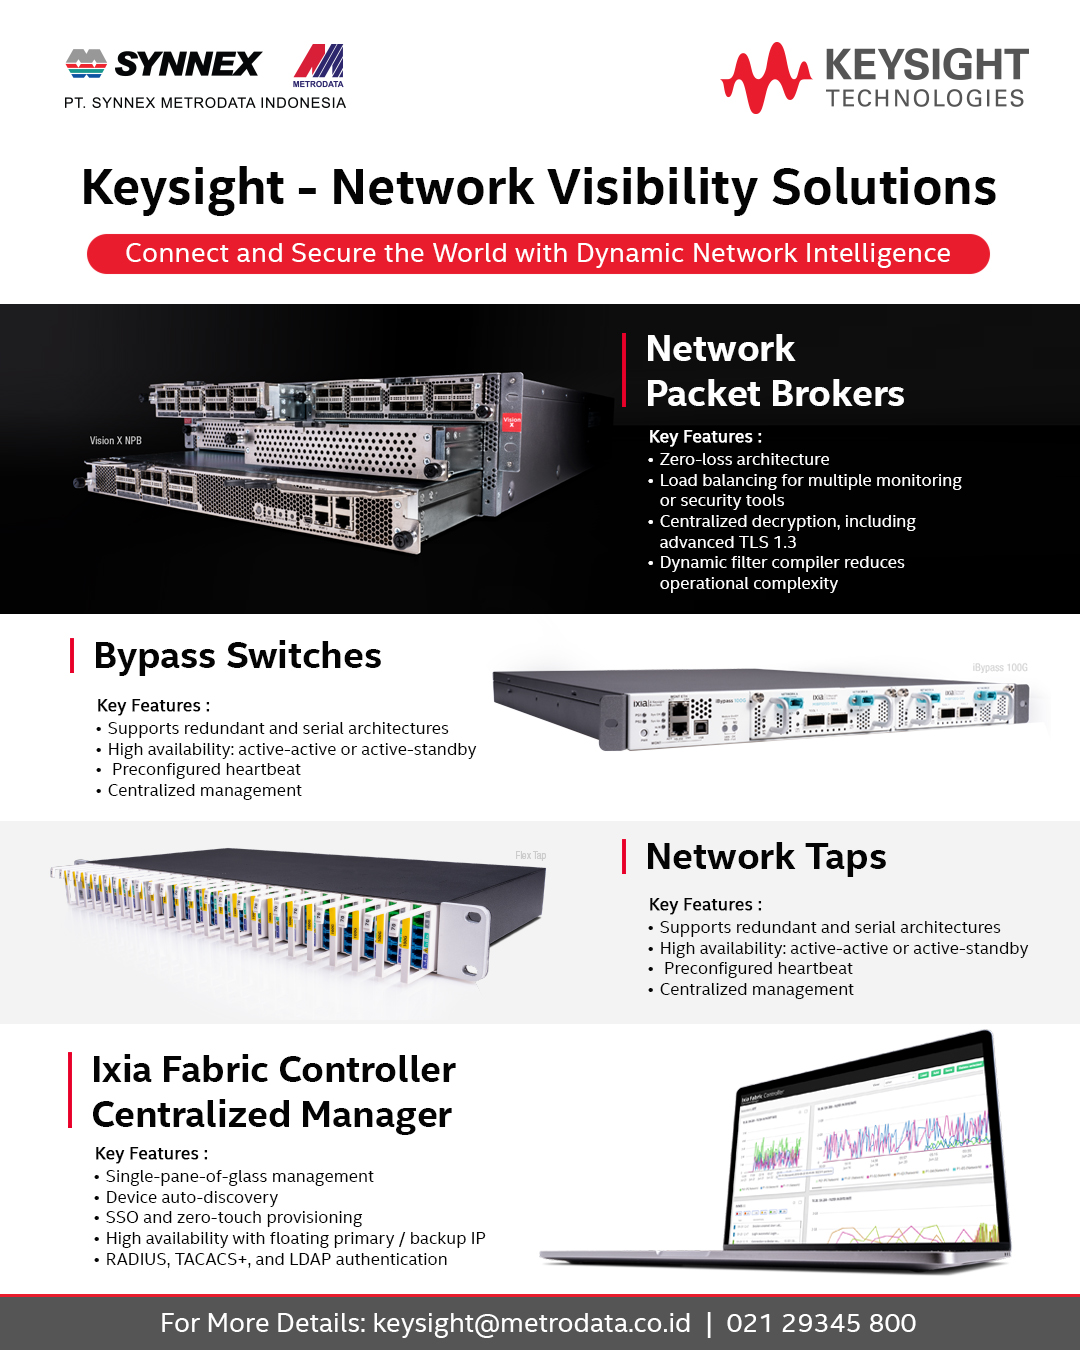 https://www.synnexmetrodata.com/wp-content/uploads/2021/11/Keysight-Network-Visibility-Solutions.jpg